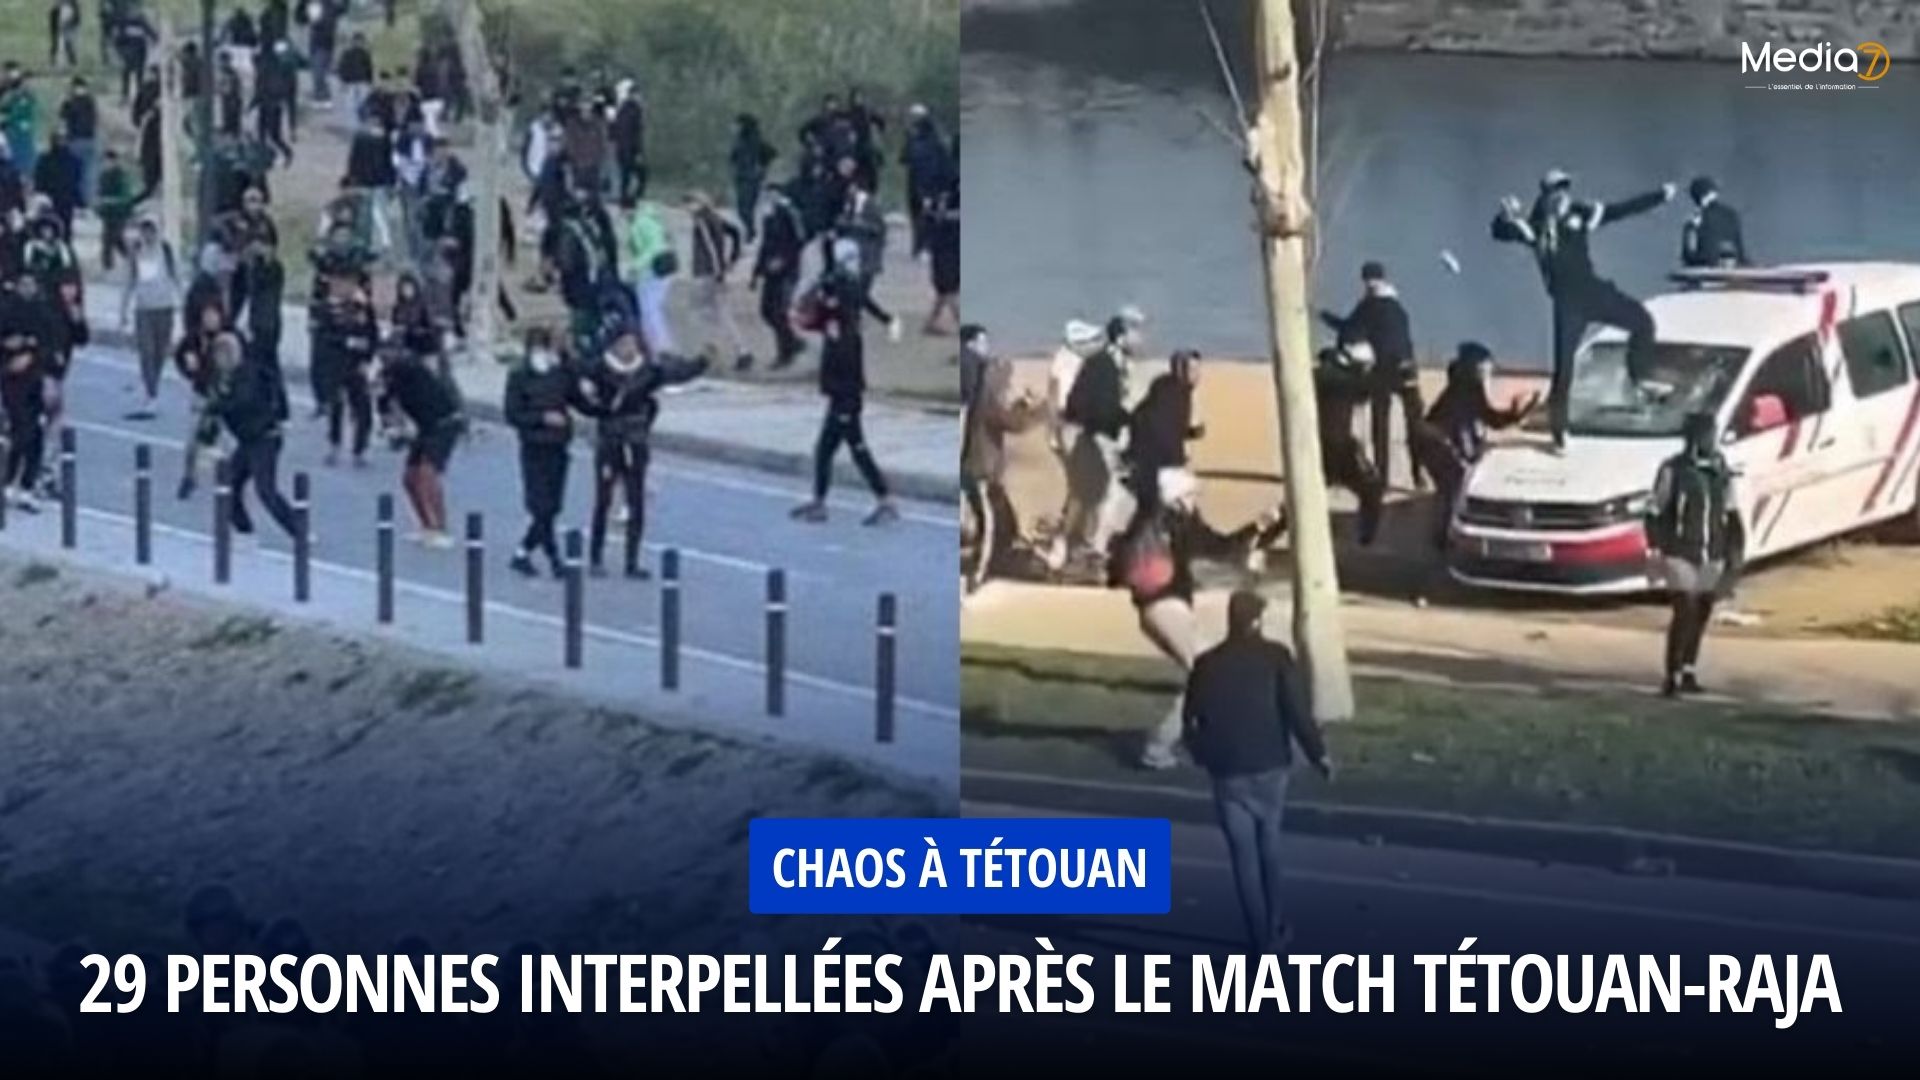 Chaos in Tetouan: 29 People Arrested After the Tetouan-Raja Match - Media7